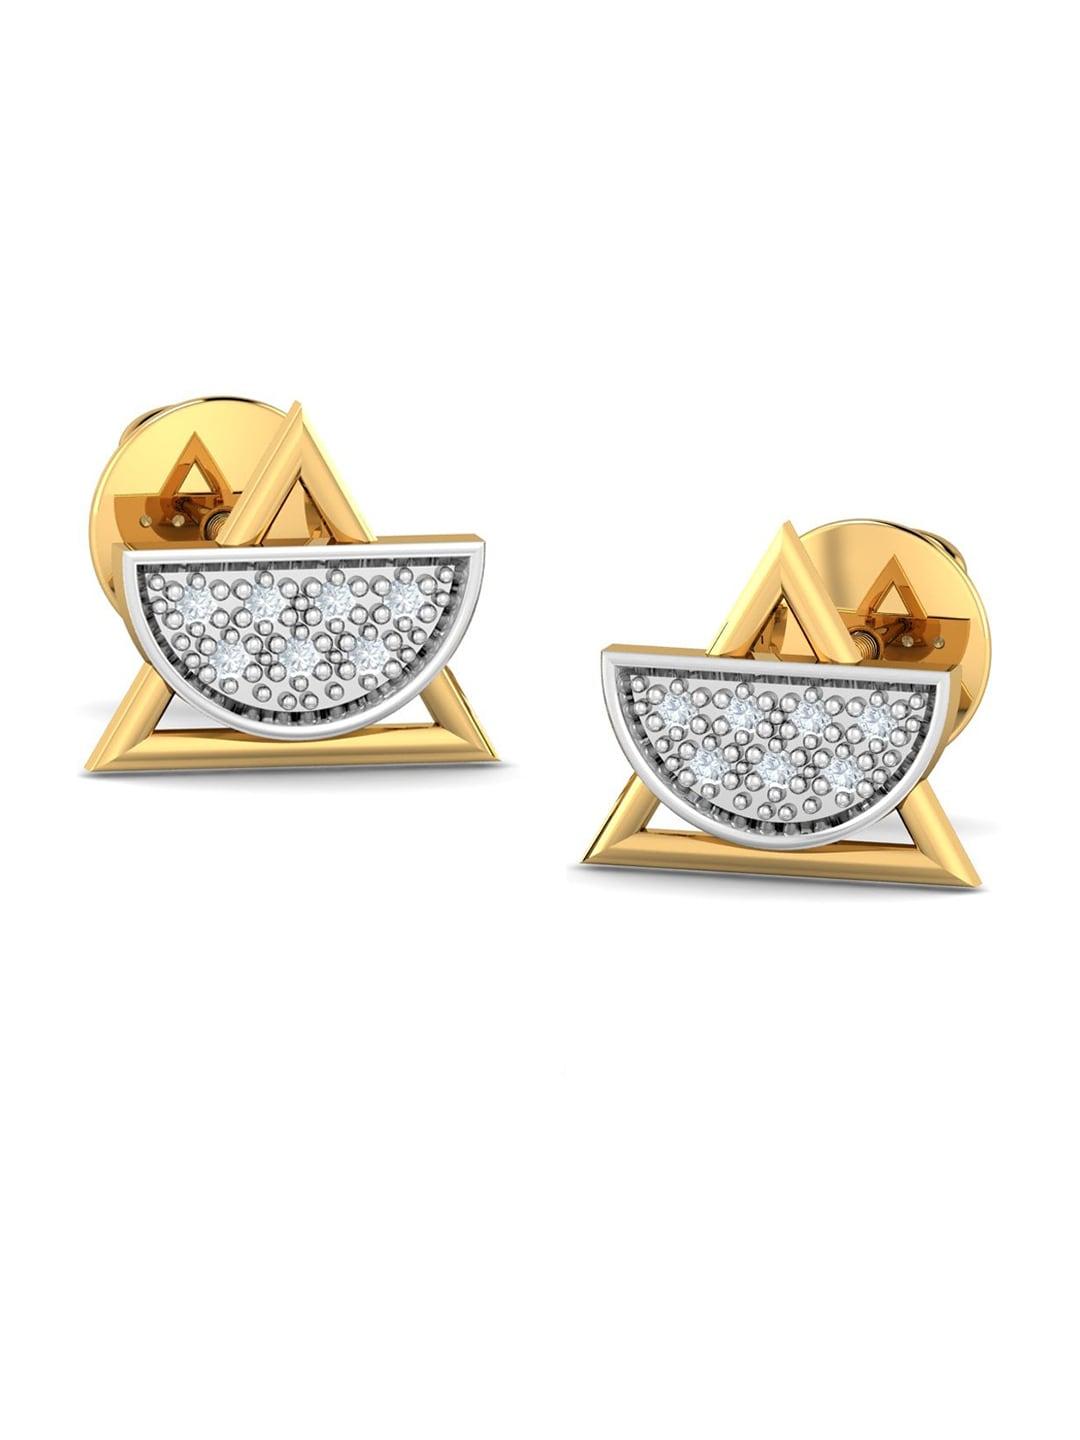 KUBERBOX Abelia 18KT Gold Diamond Studded Earrings - 1.7 g